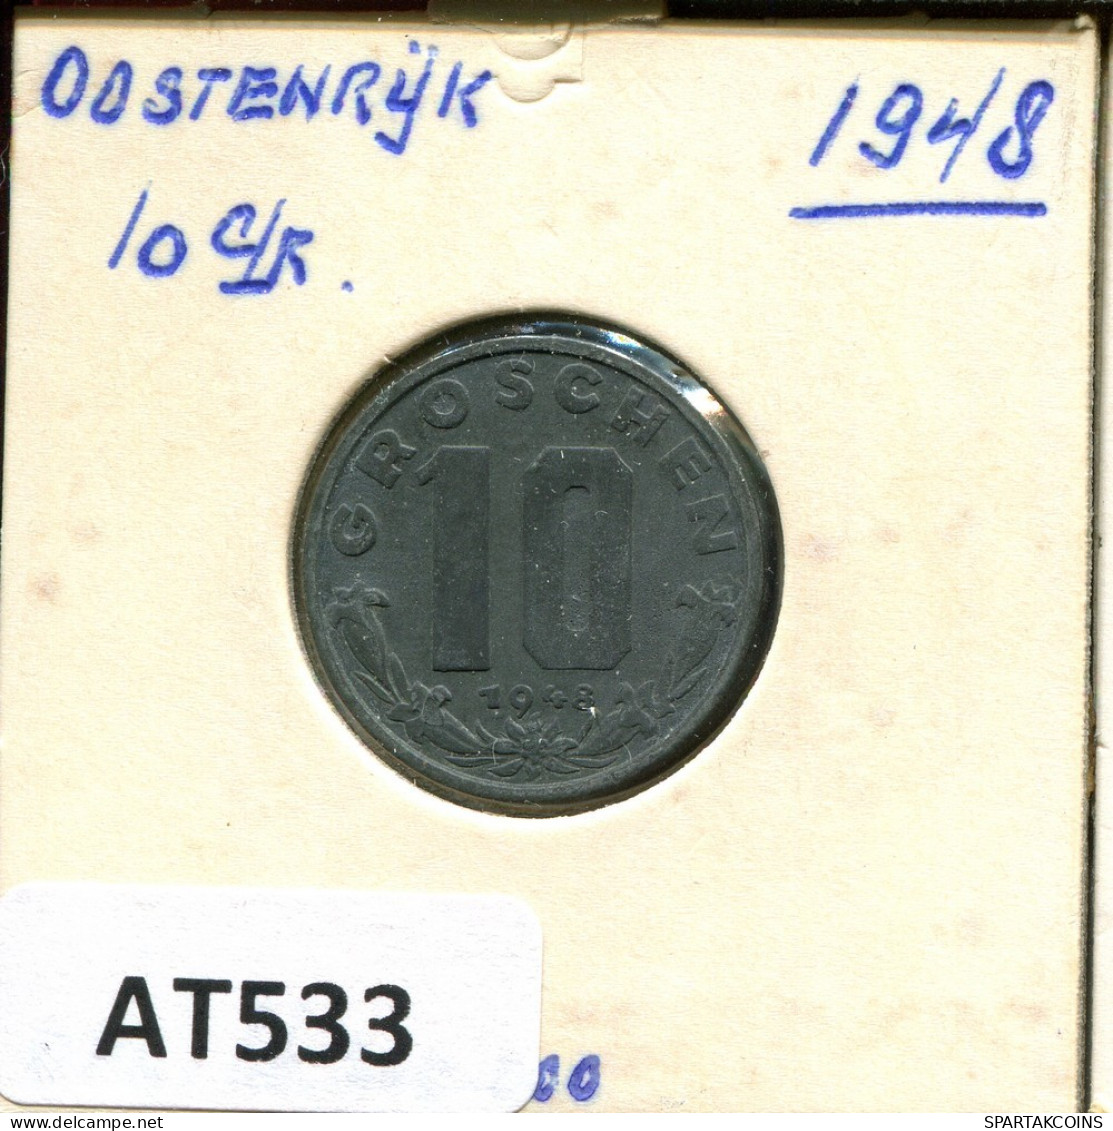 10 GROSCHEN 1948 AUSTRIA Coin #AT533.U.A - Autriche